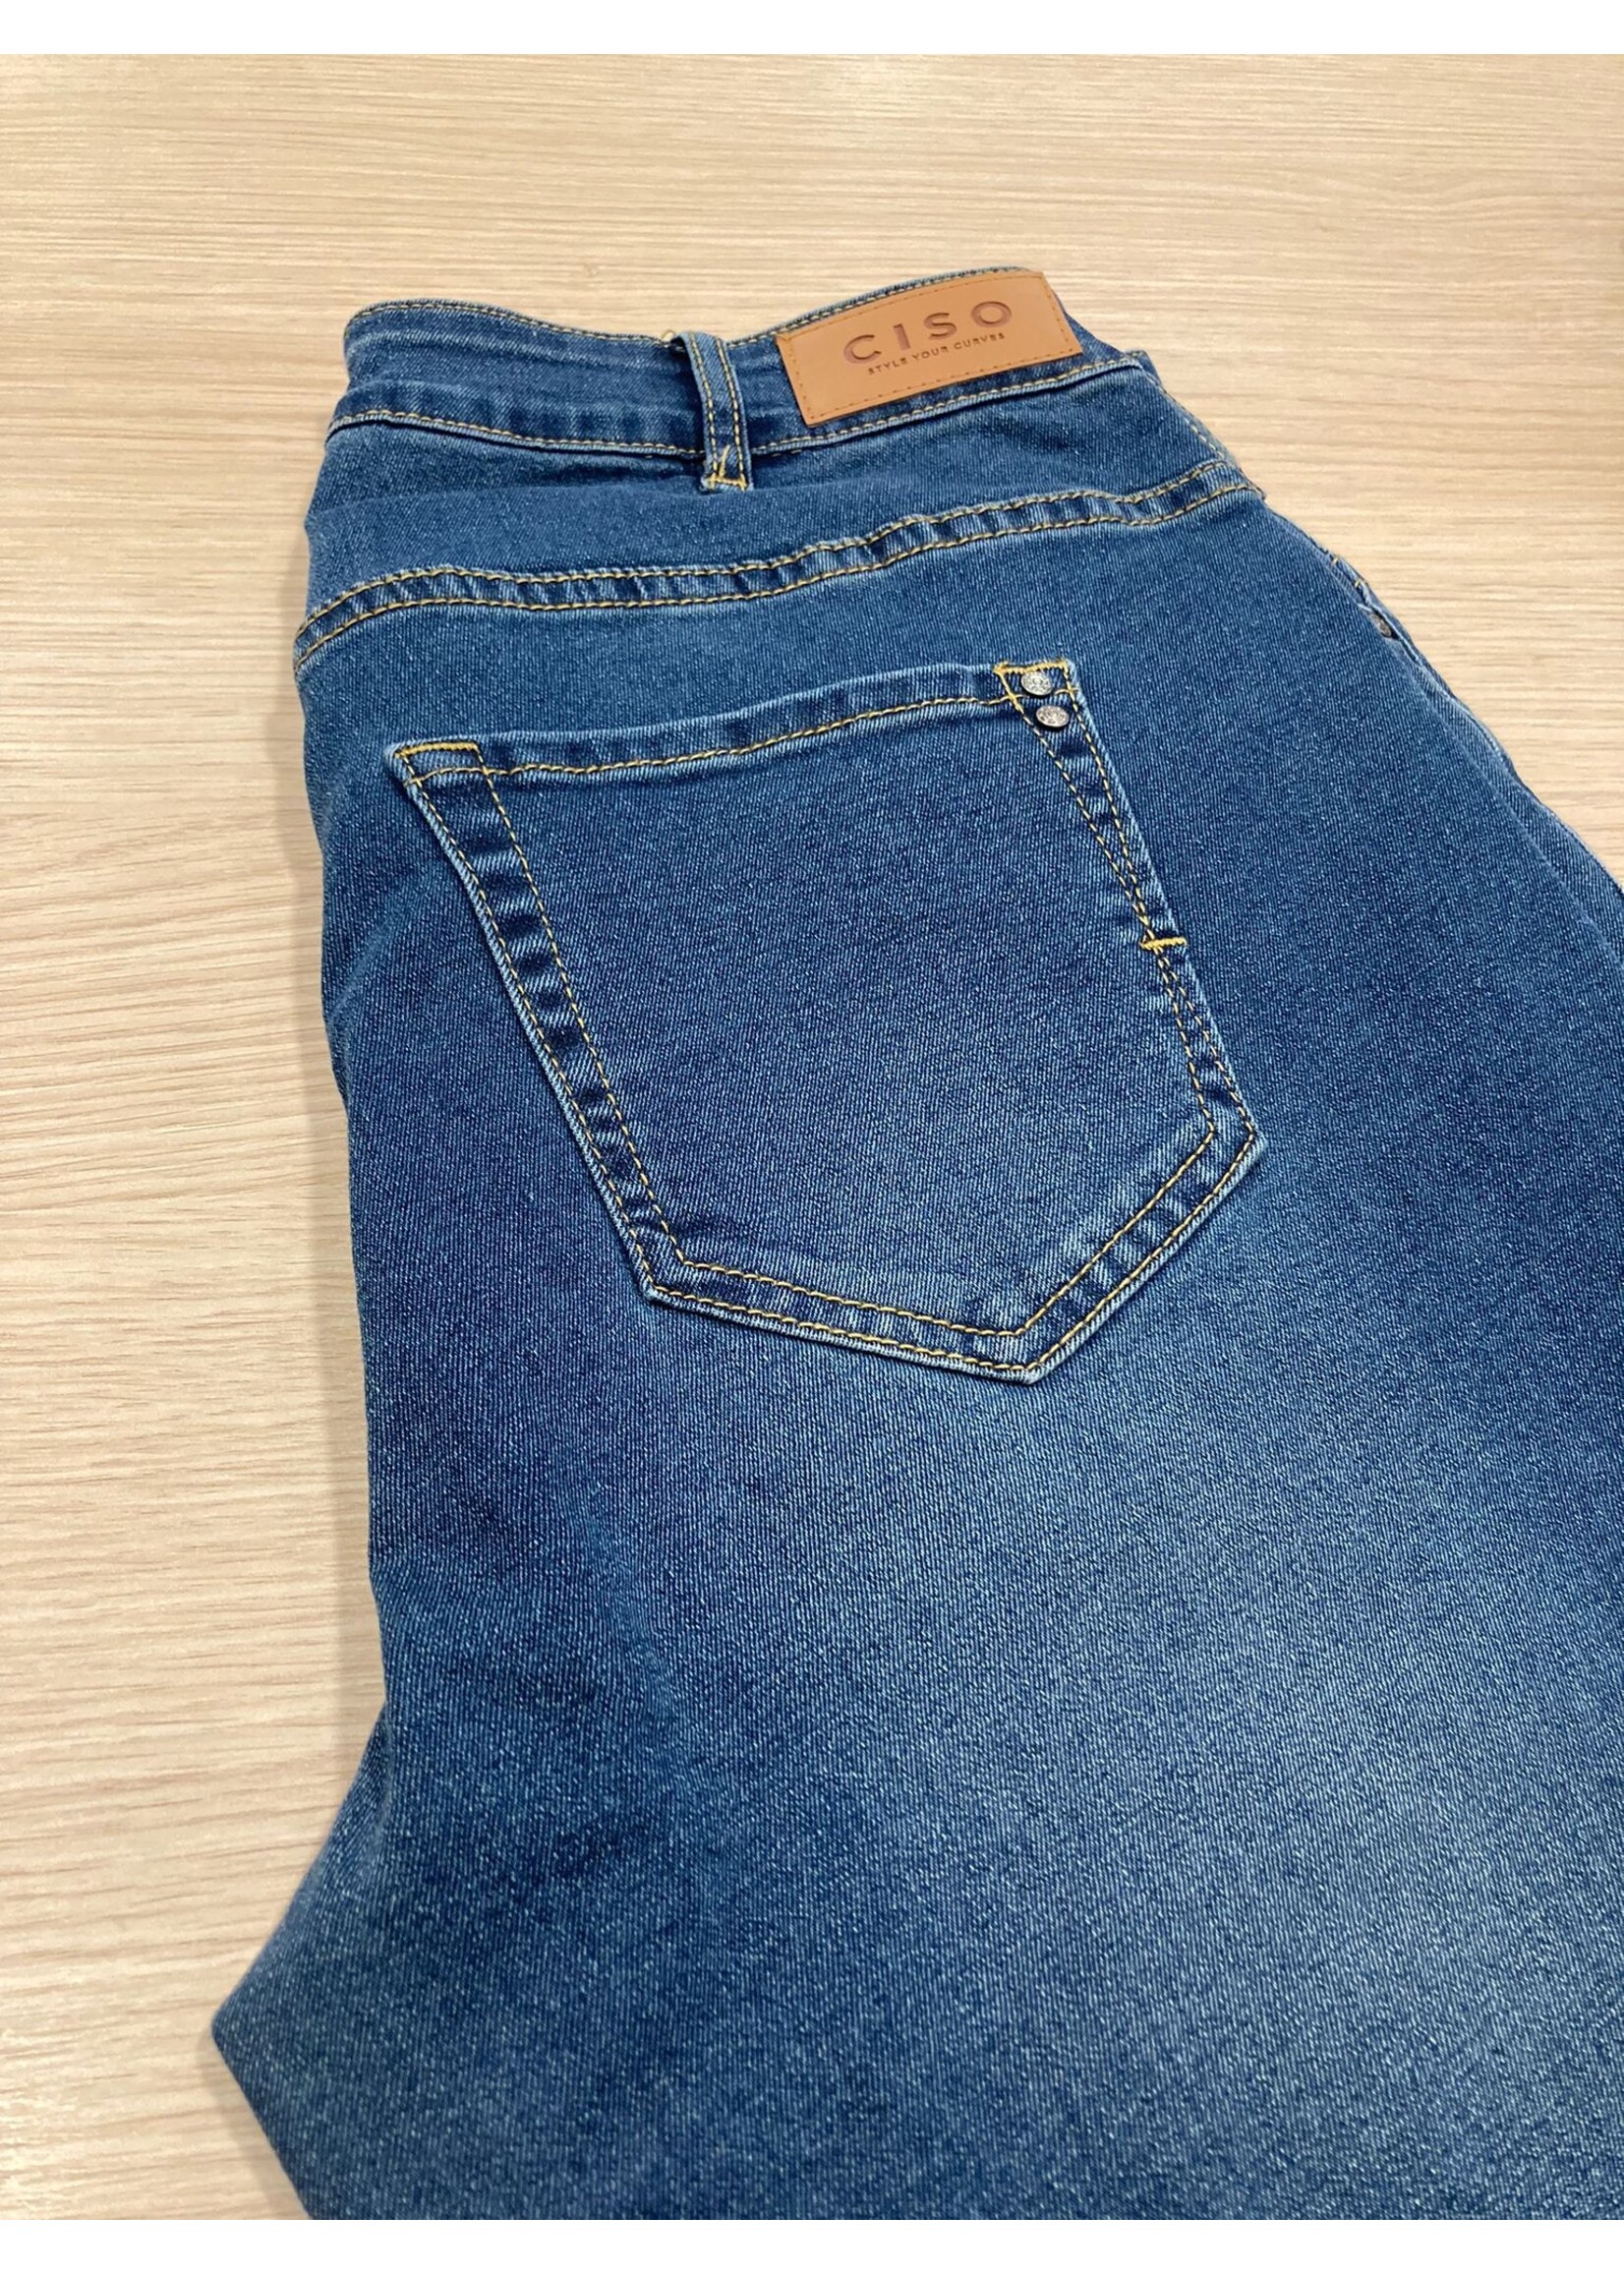 Ciso Sofia jeans 210141*